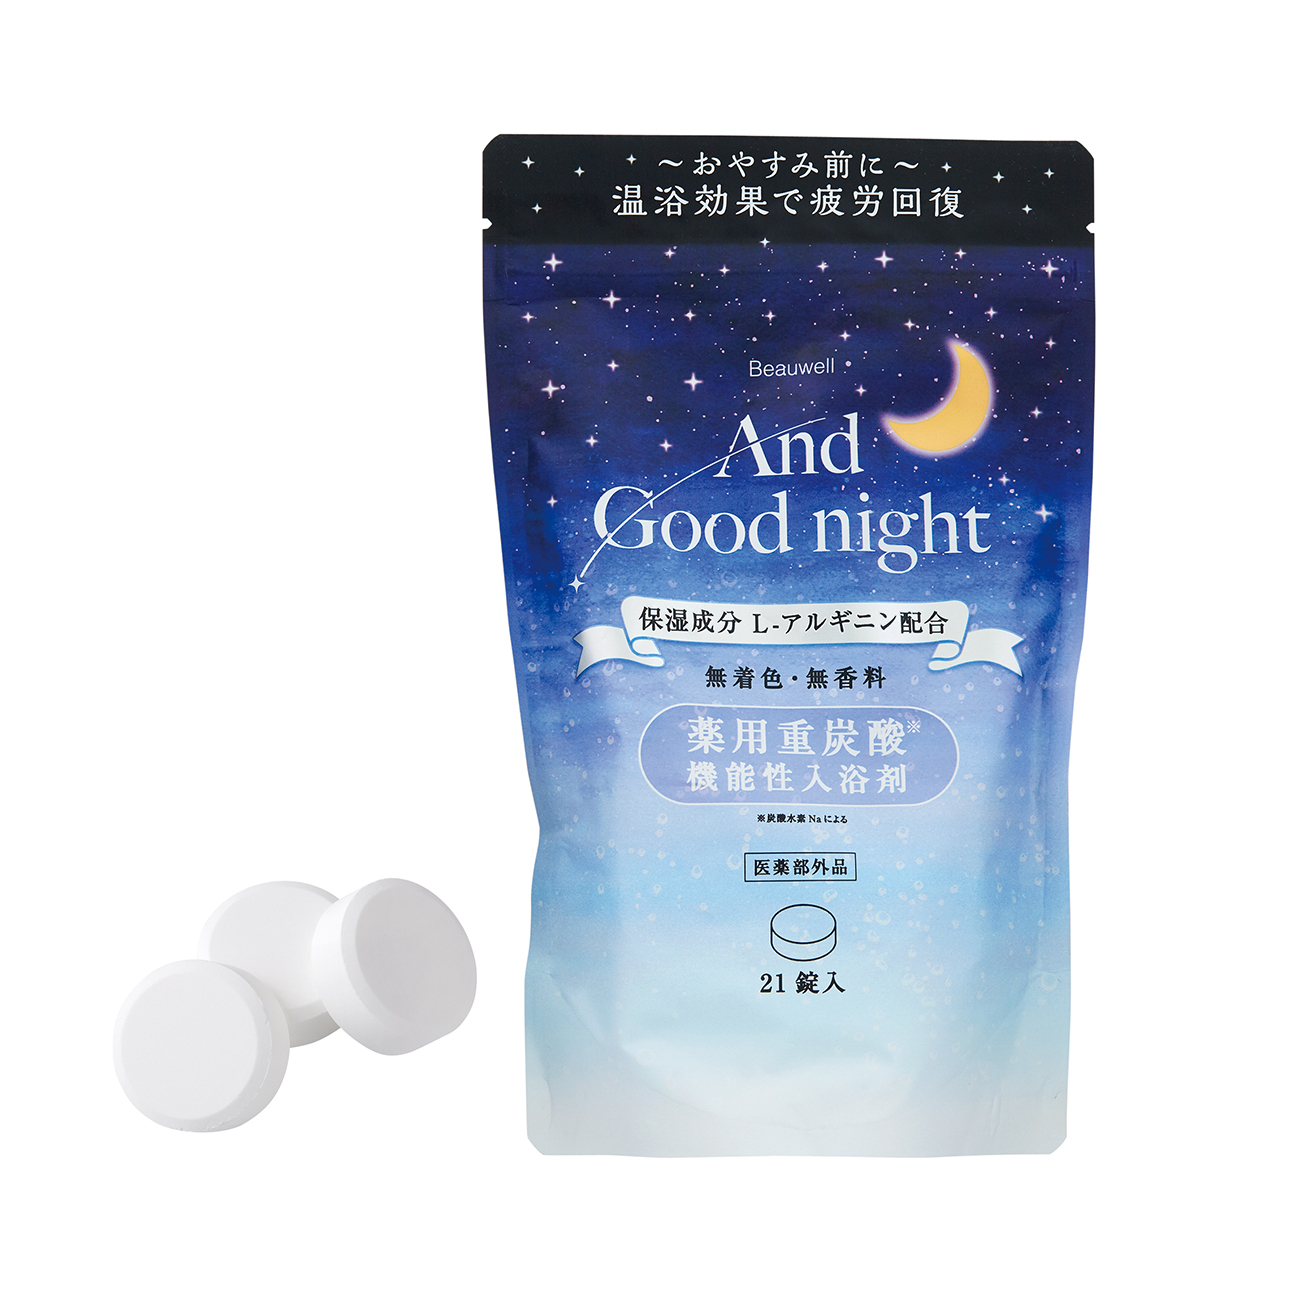 【And Good night】アンドグッドナイト 薬用入浴剤(重炭酸)L 機能性入浴料【日本製】